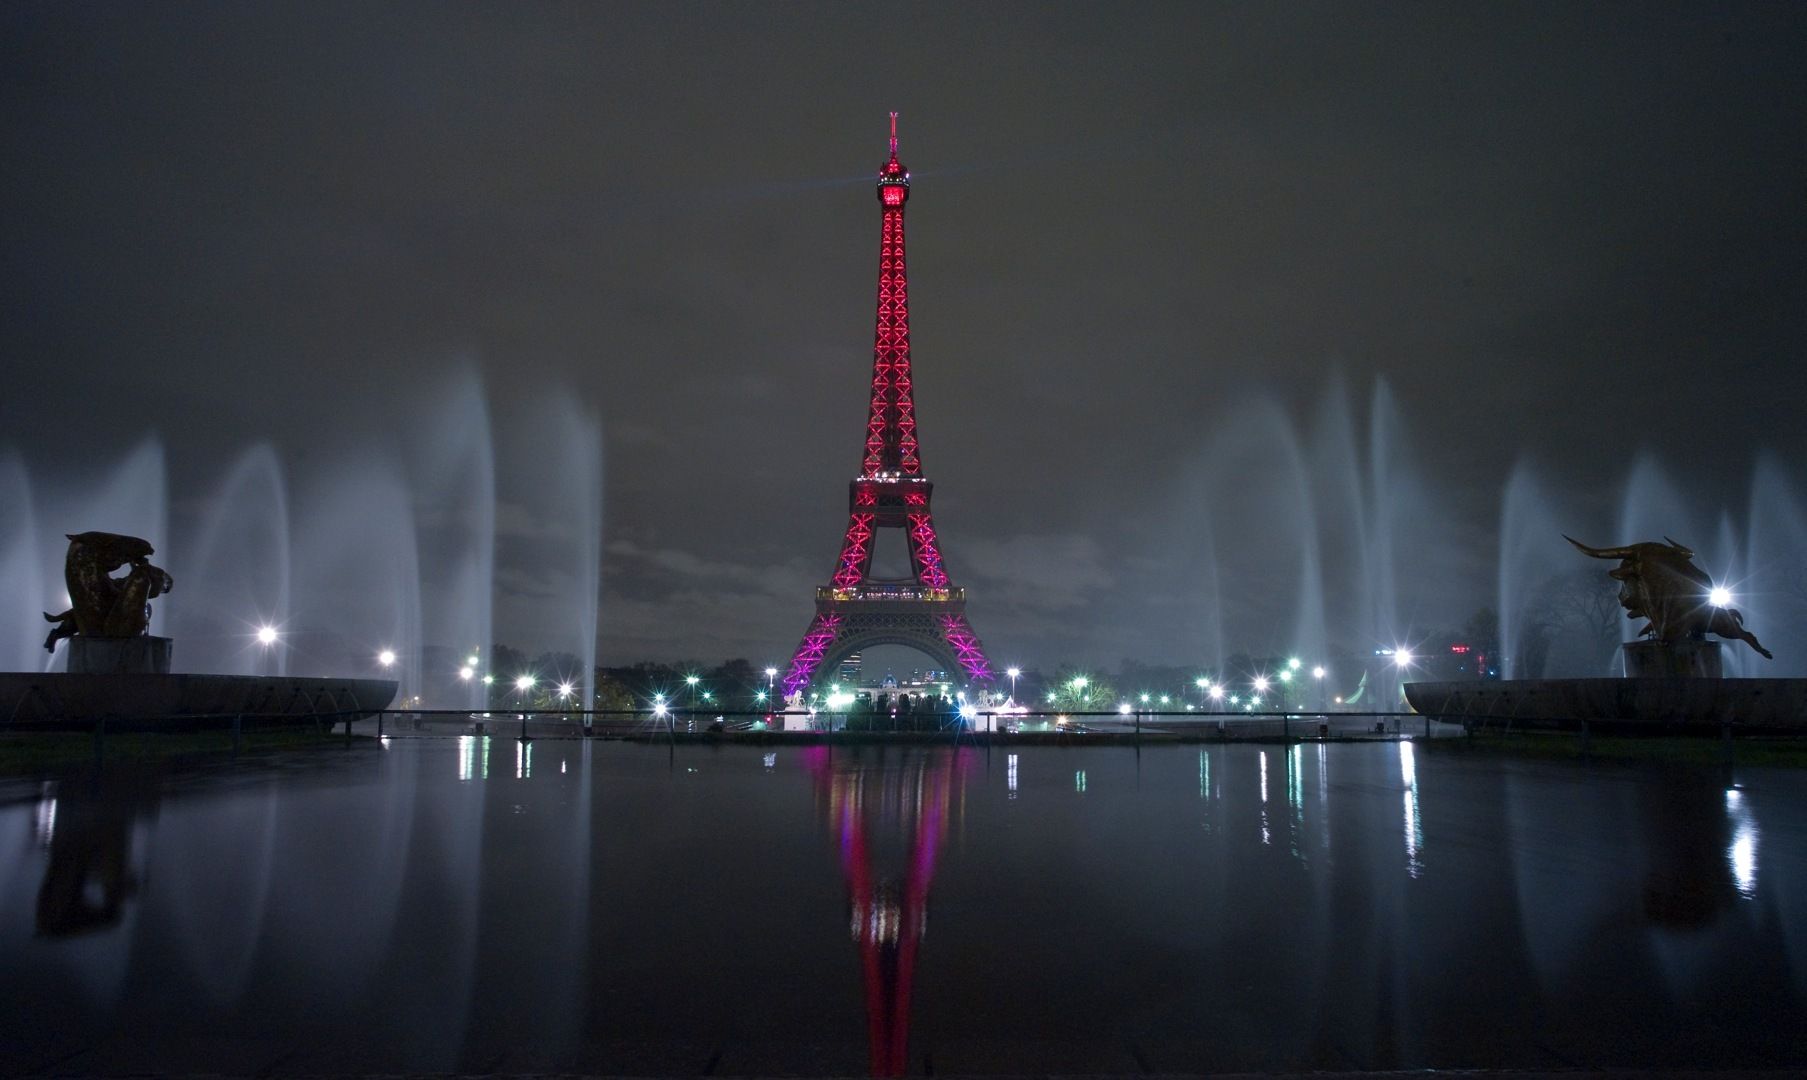 Mobile wallpaper: Paris, Landscape, Eiffel Tower, Cities, Architecture, 23463 download the picture for free